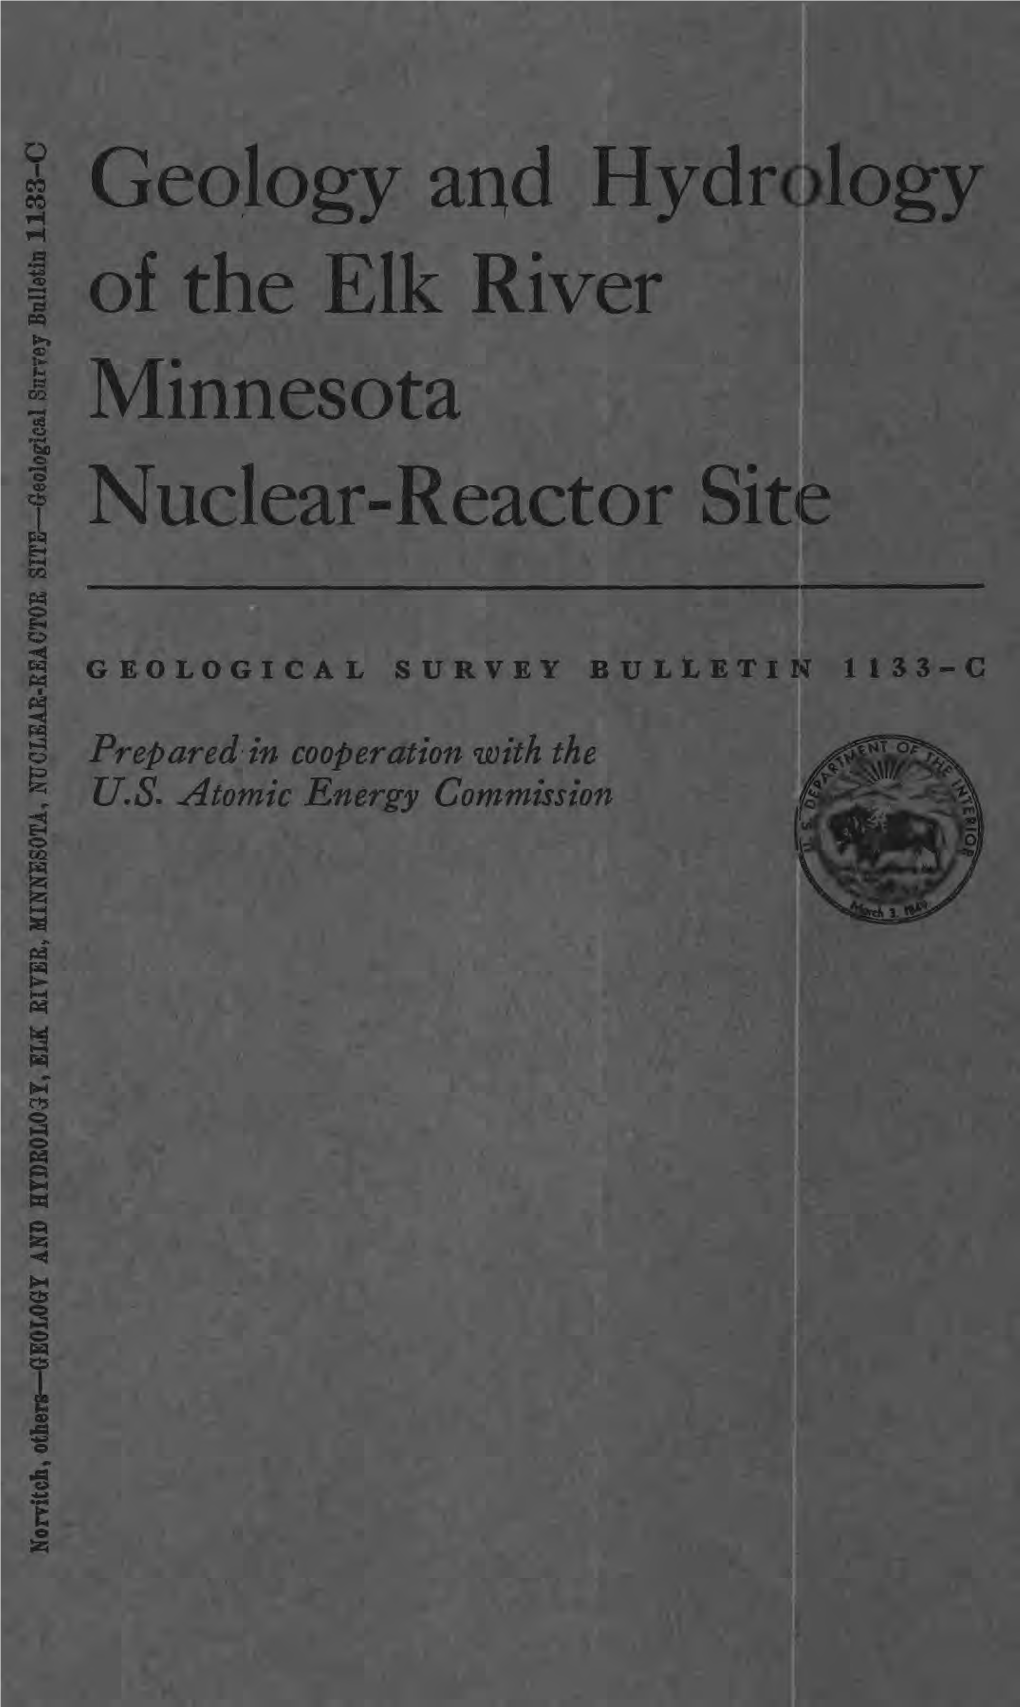 Of the Elk River M\ *° Ll | Minnesota M I Nuclear-Reactor Site